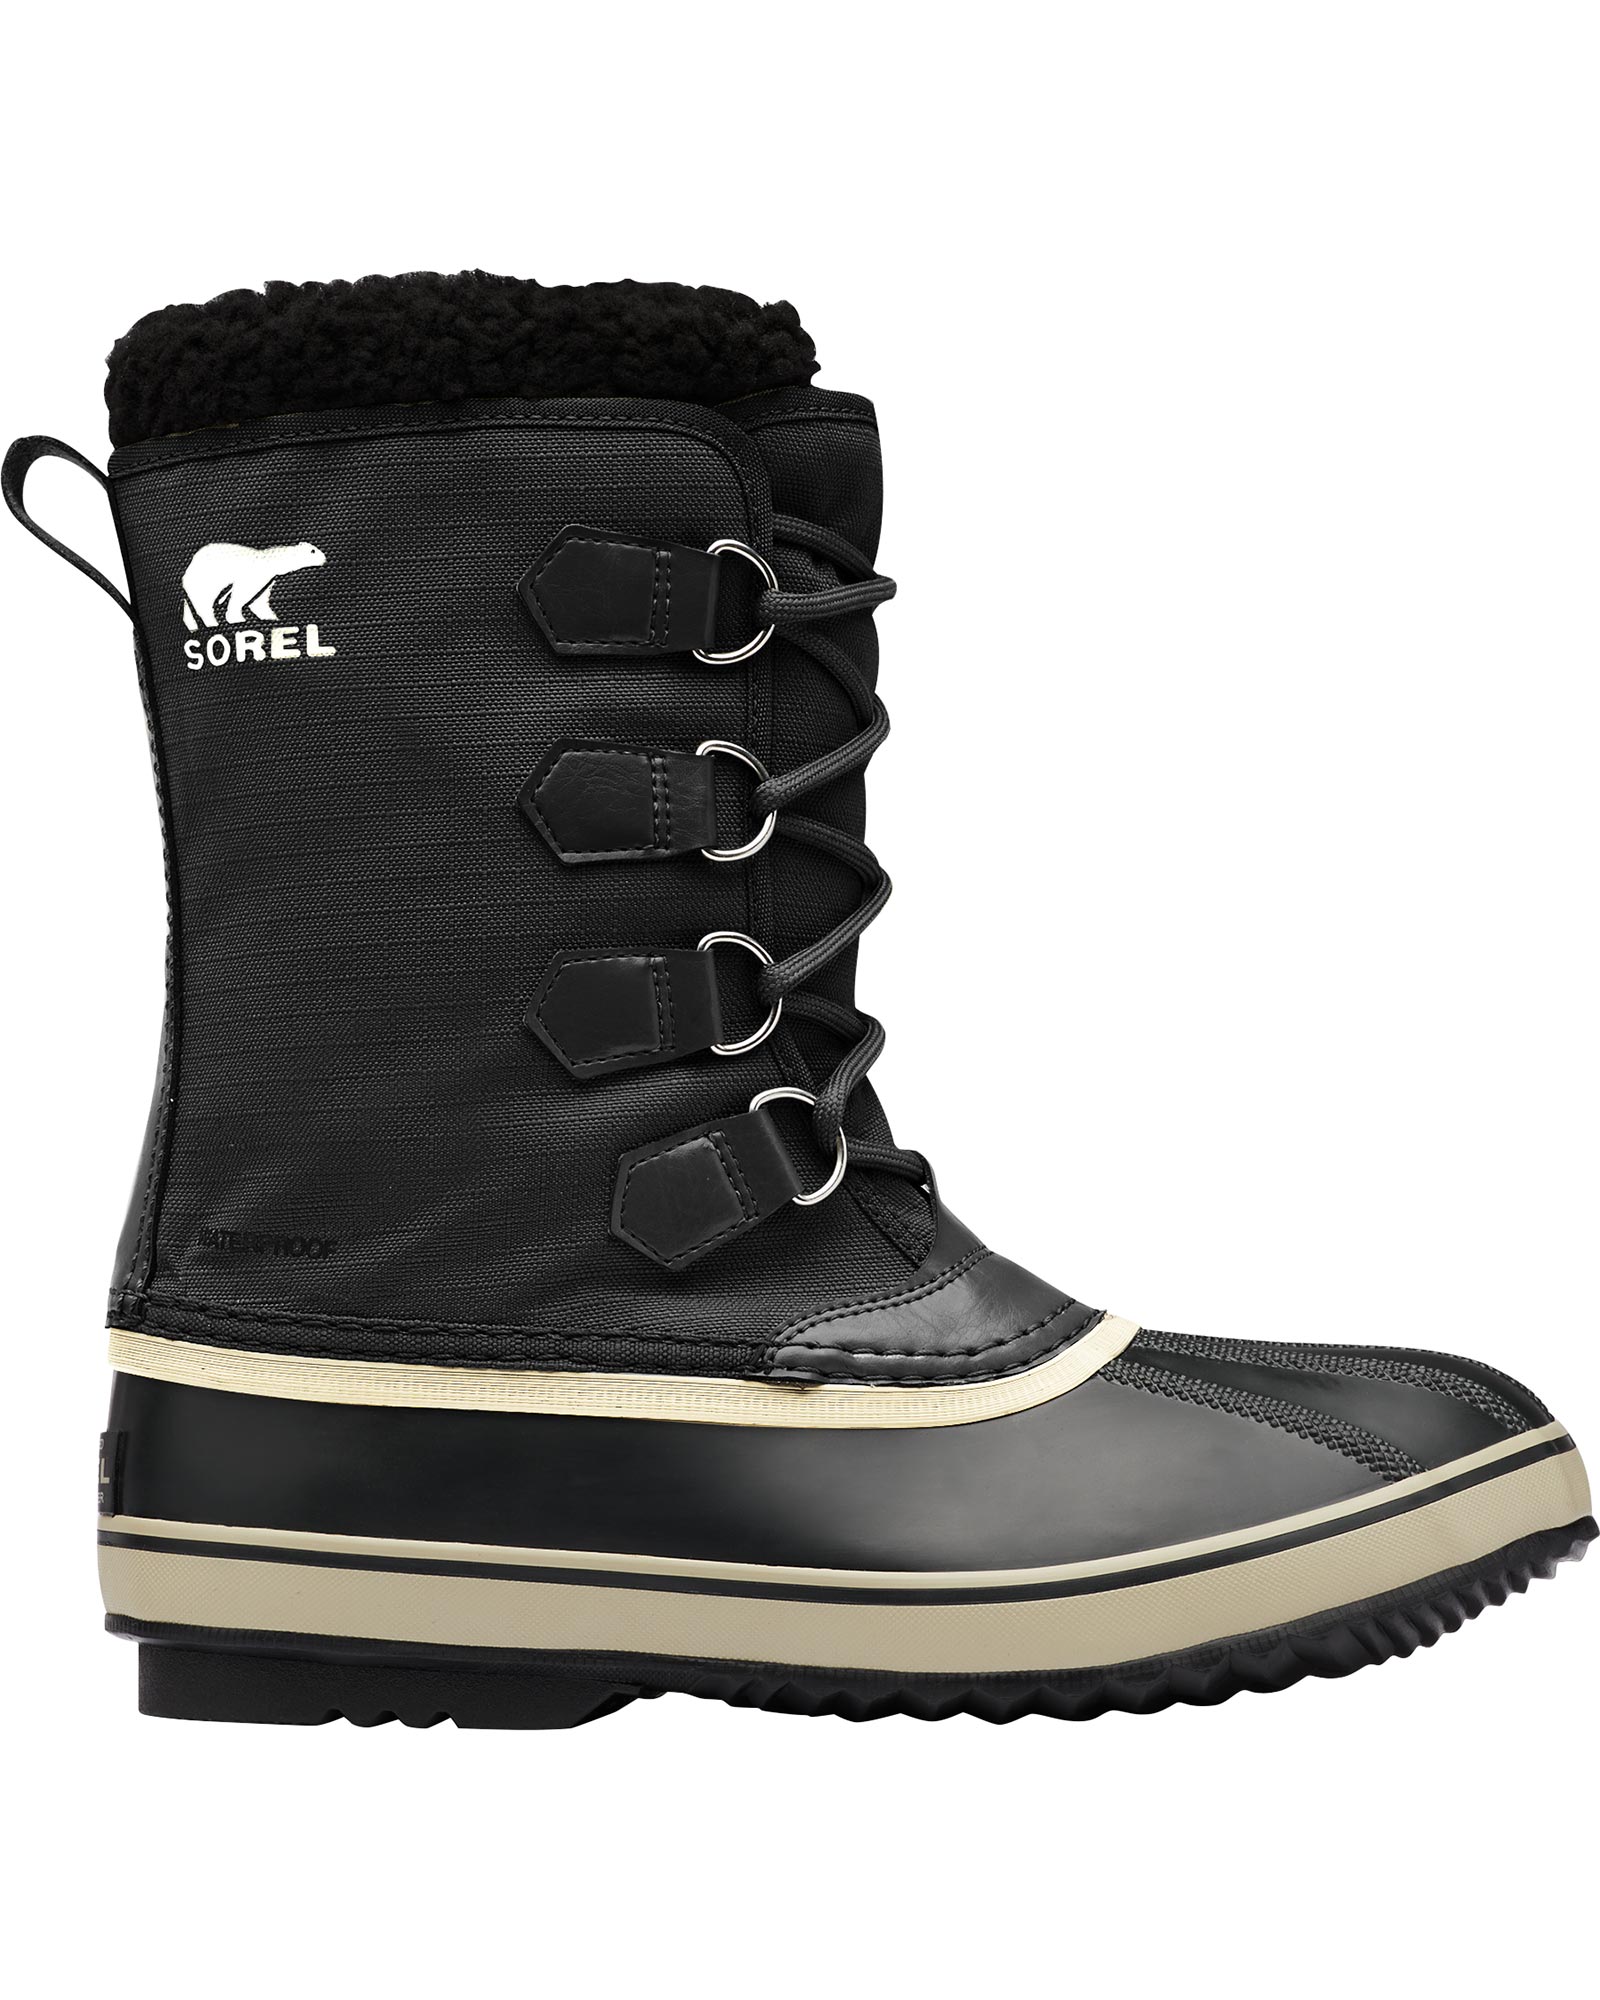 Sorel 1964 Pac Nylon Men’s Snow Boots - black UK 11